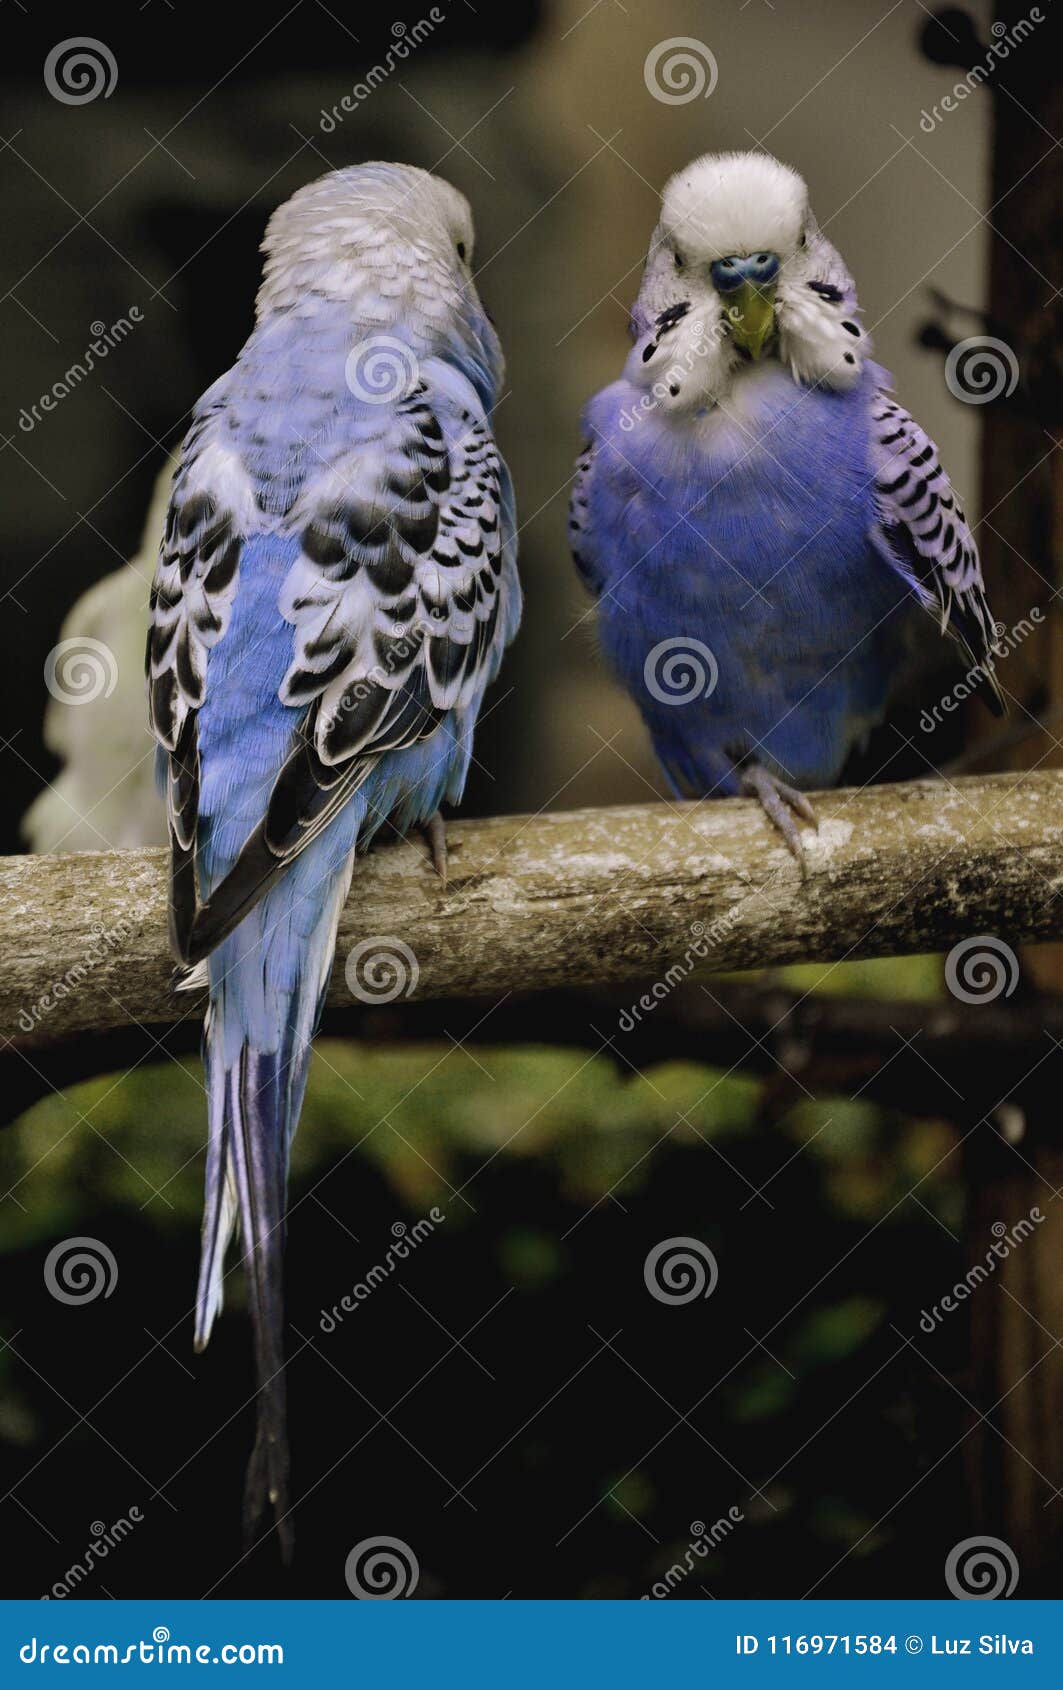 a cute couple of birds